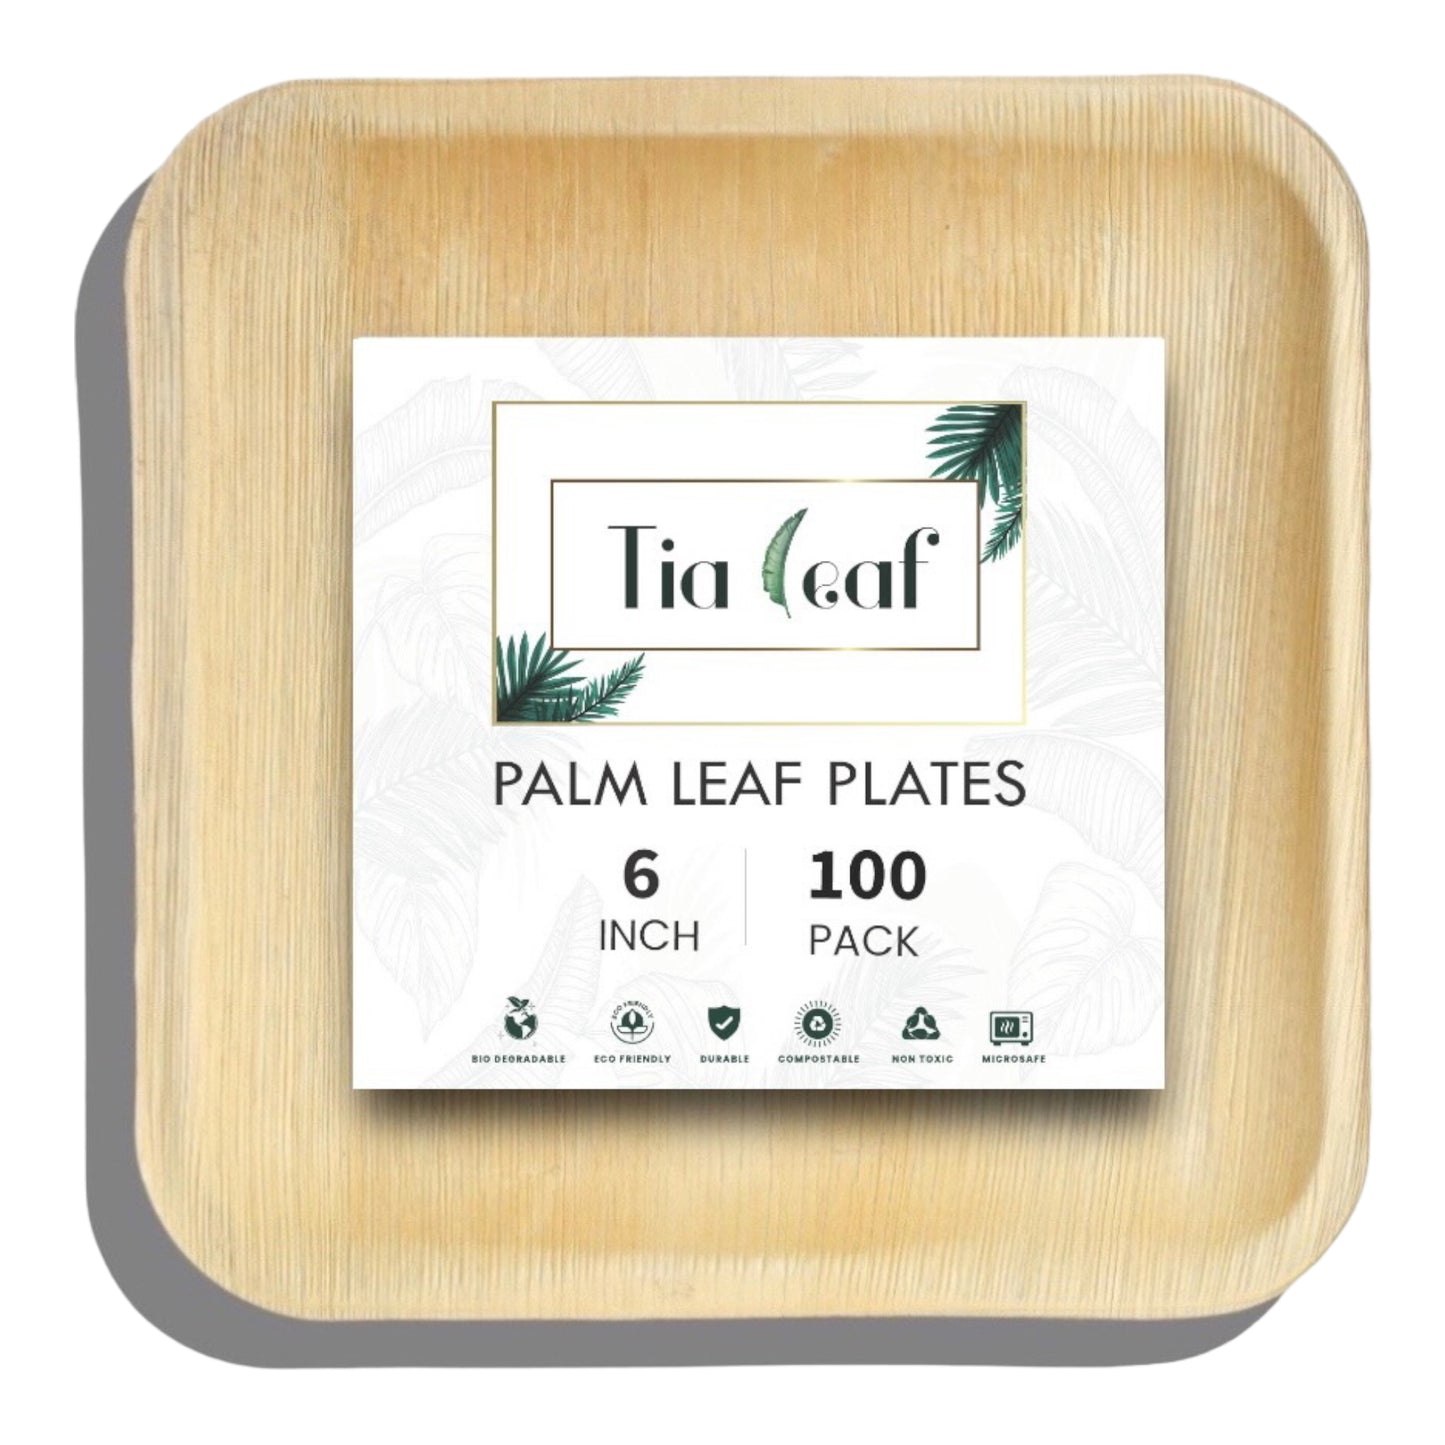 6" Square Palm Leaf Plates